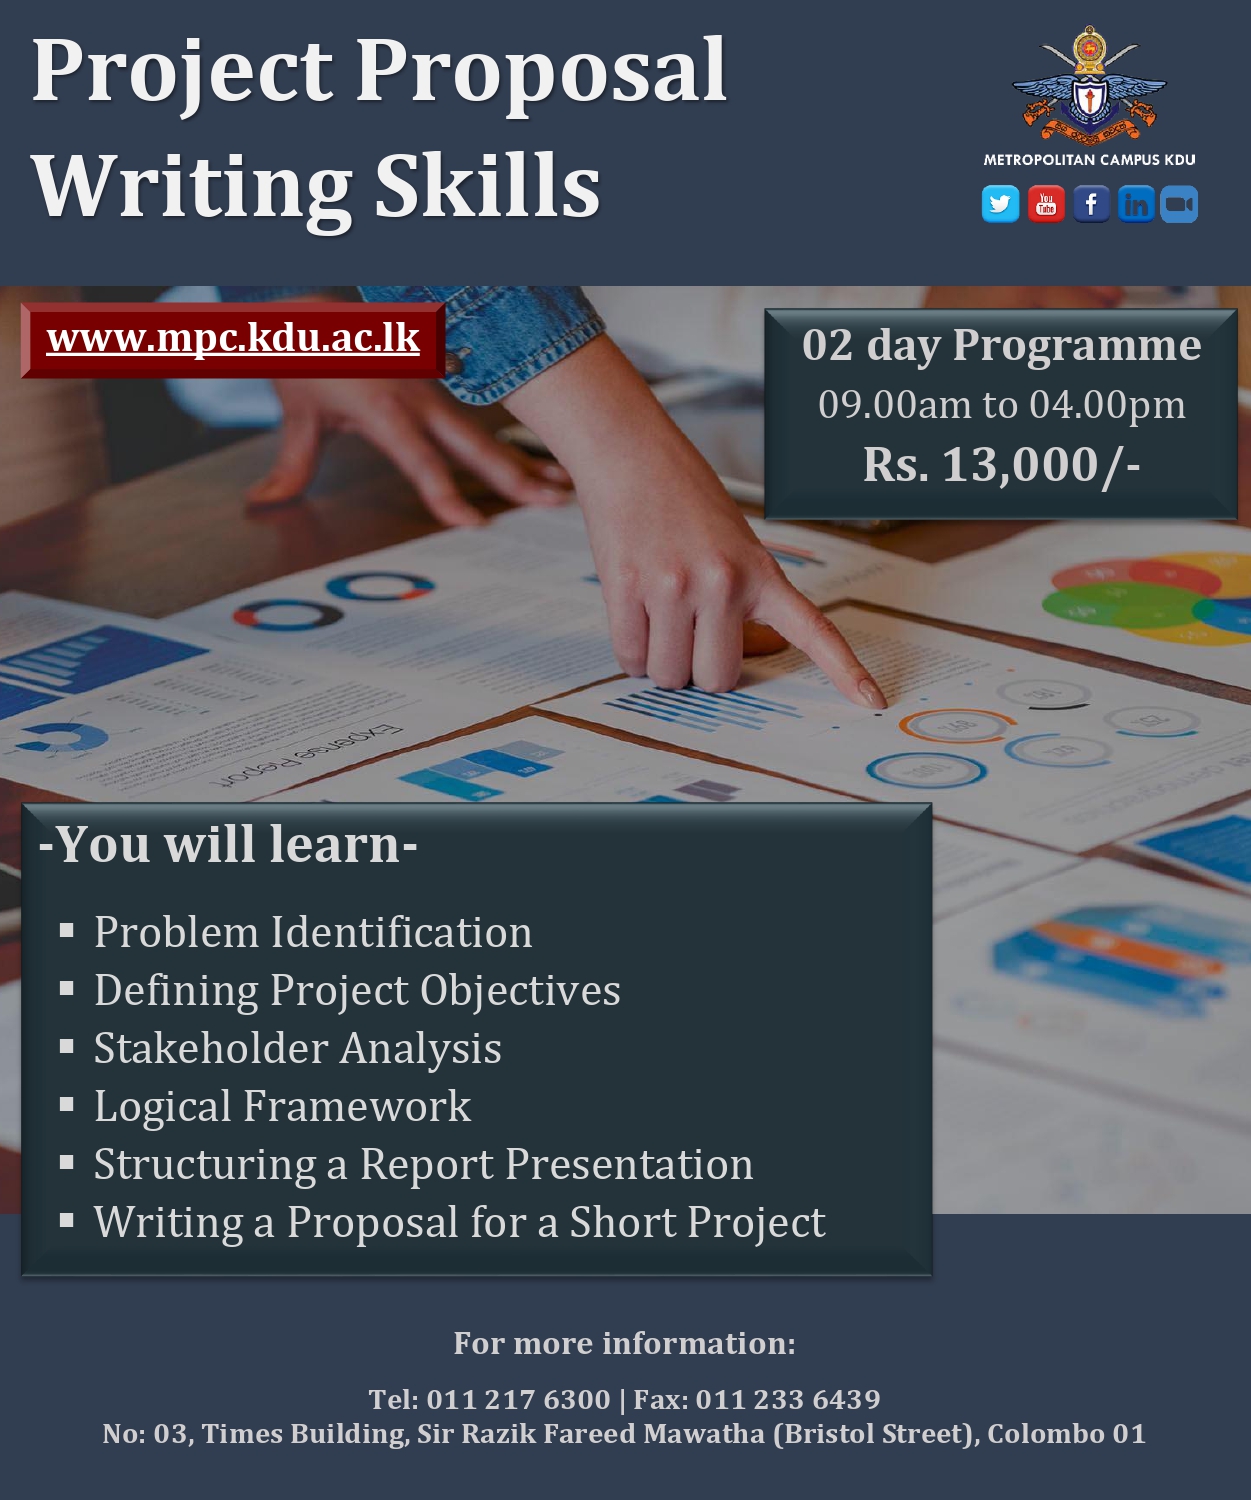 Project Proposal Writing Skills